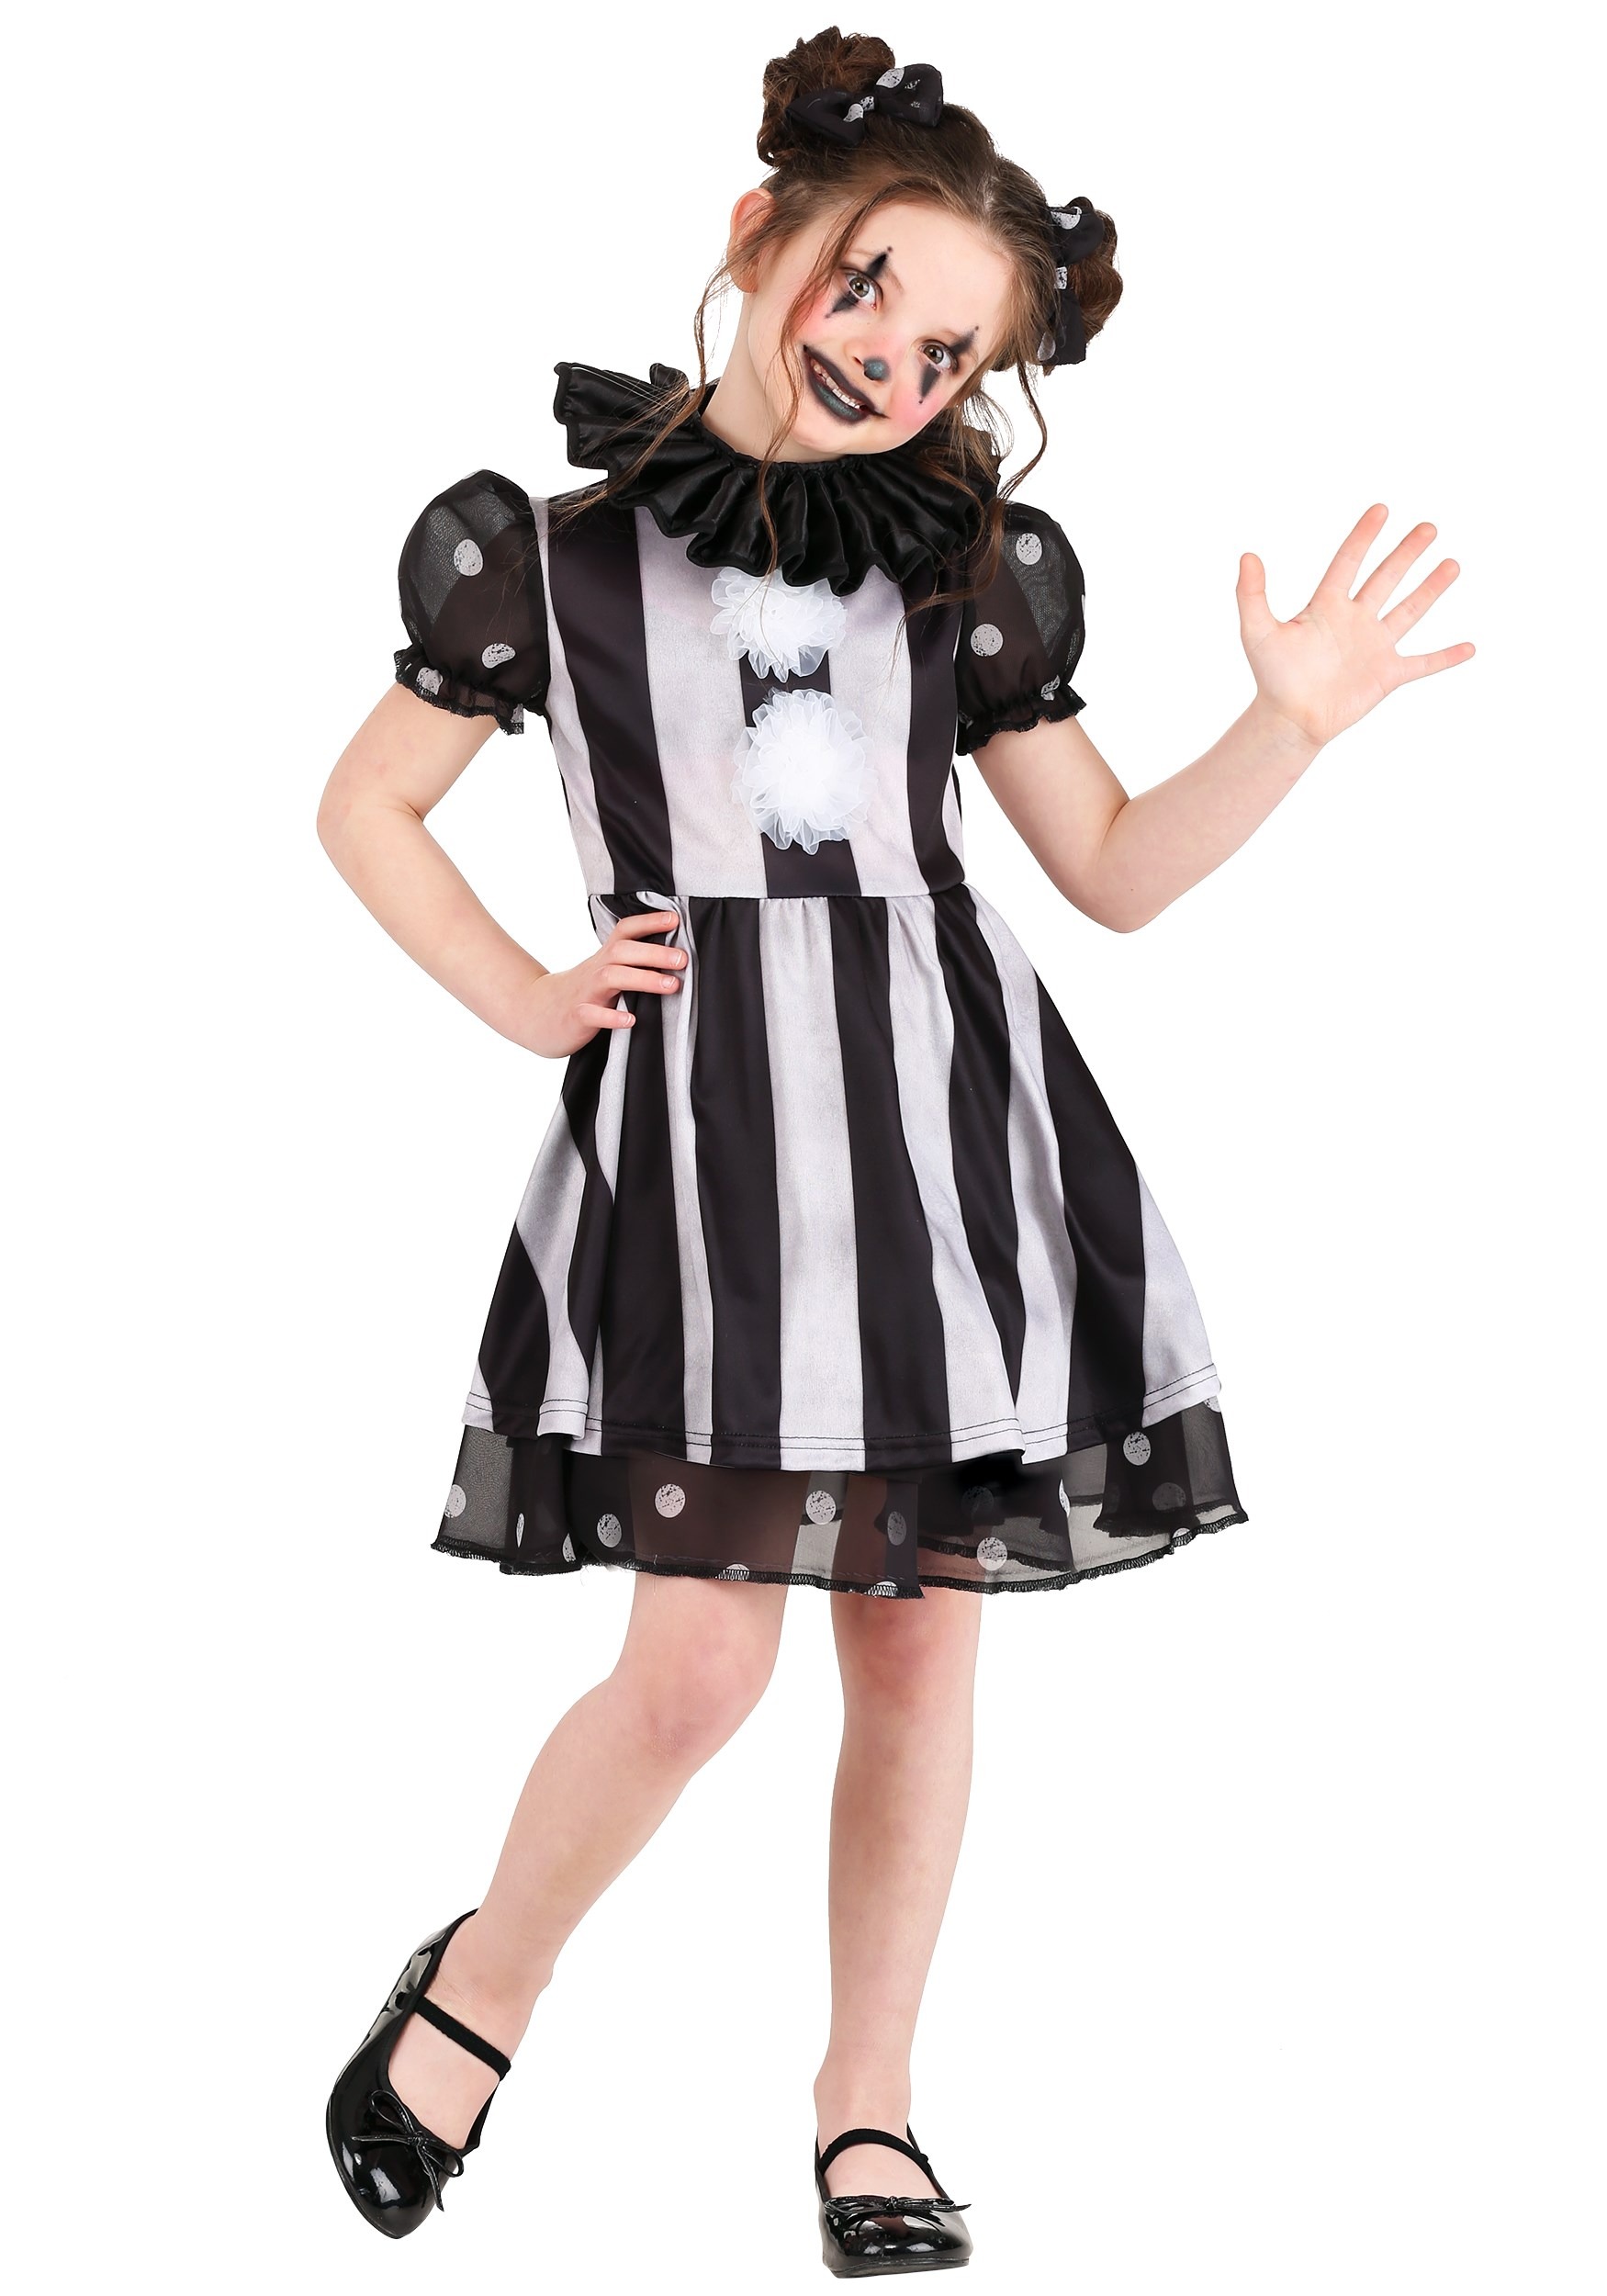 Photos - Fancy Dress Clown FUN Costumes Dark Circus  Costume for Girls Black/White 